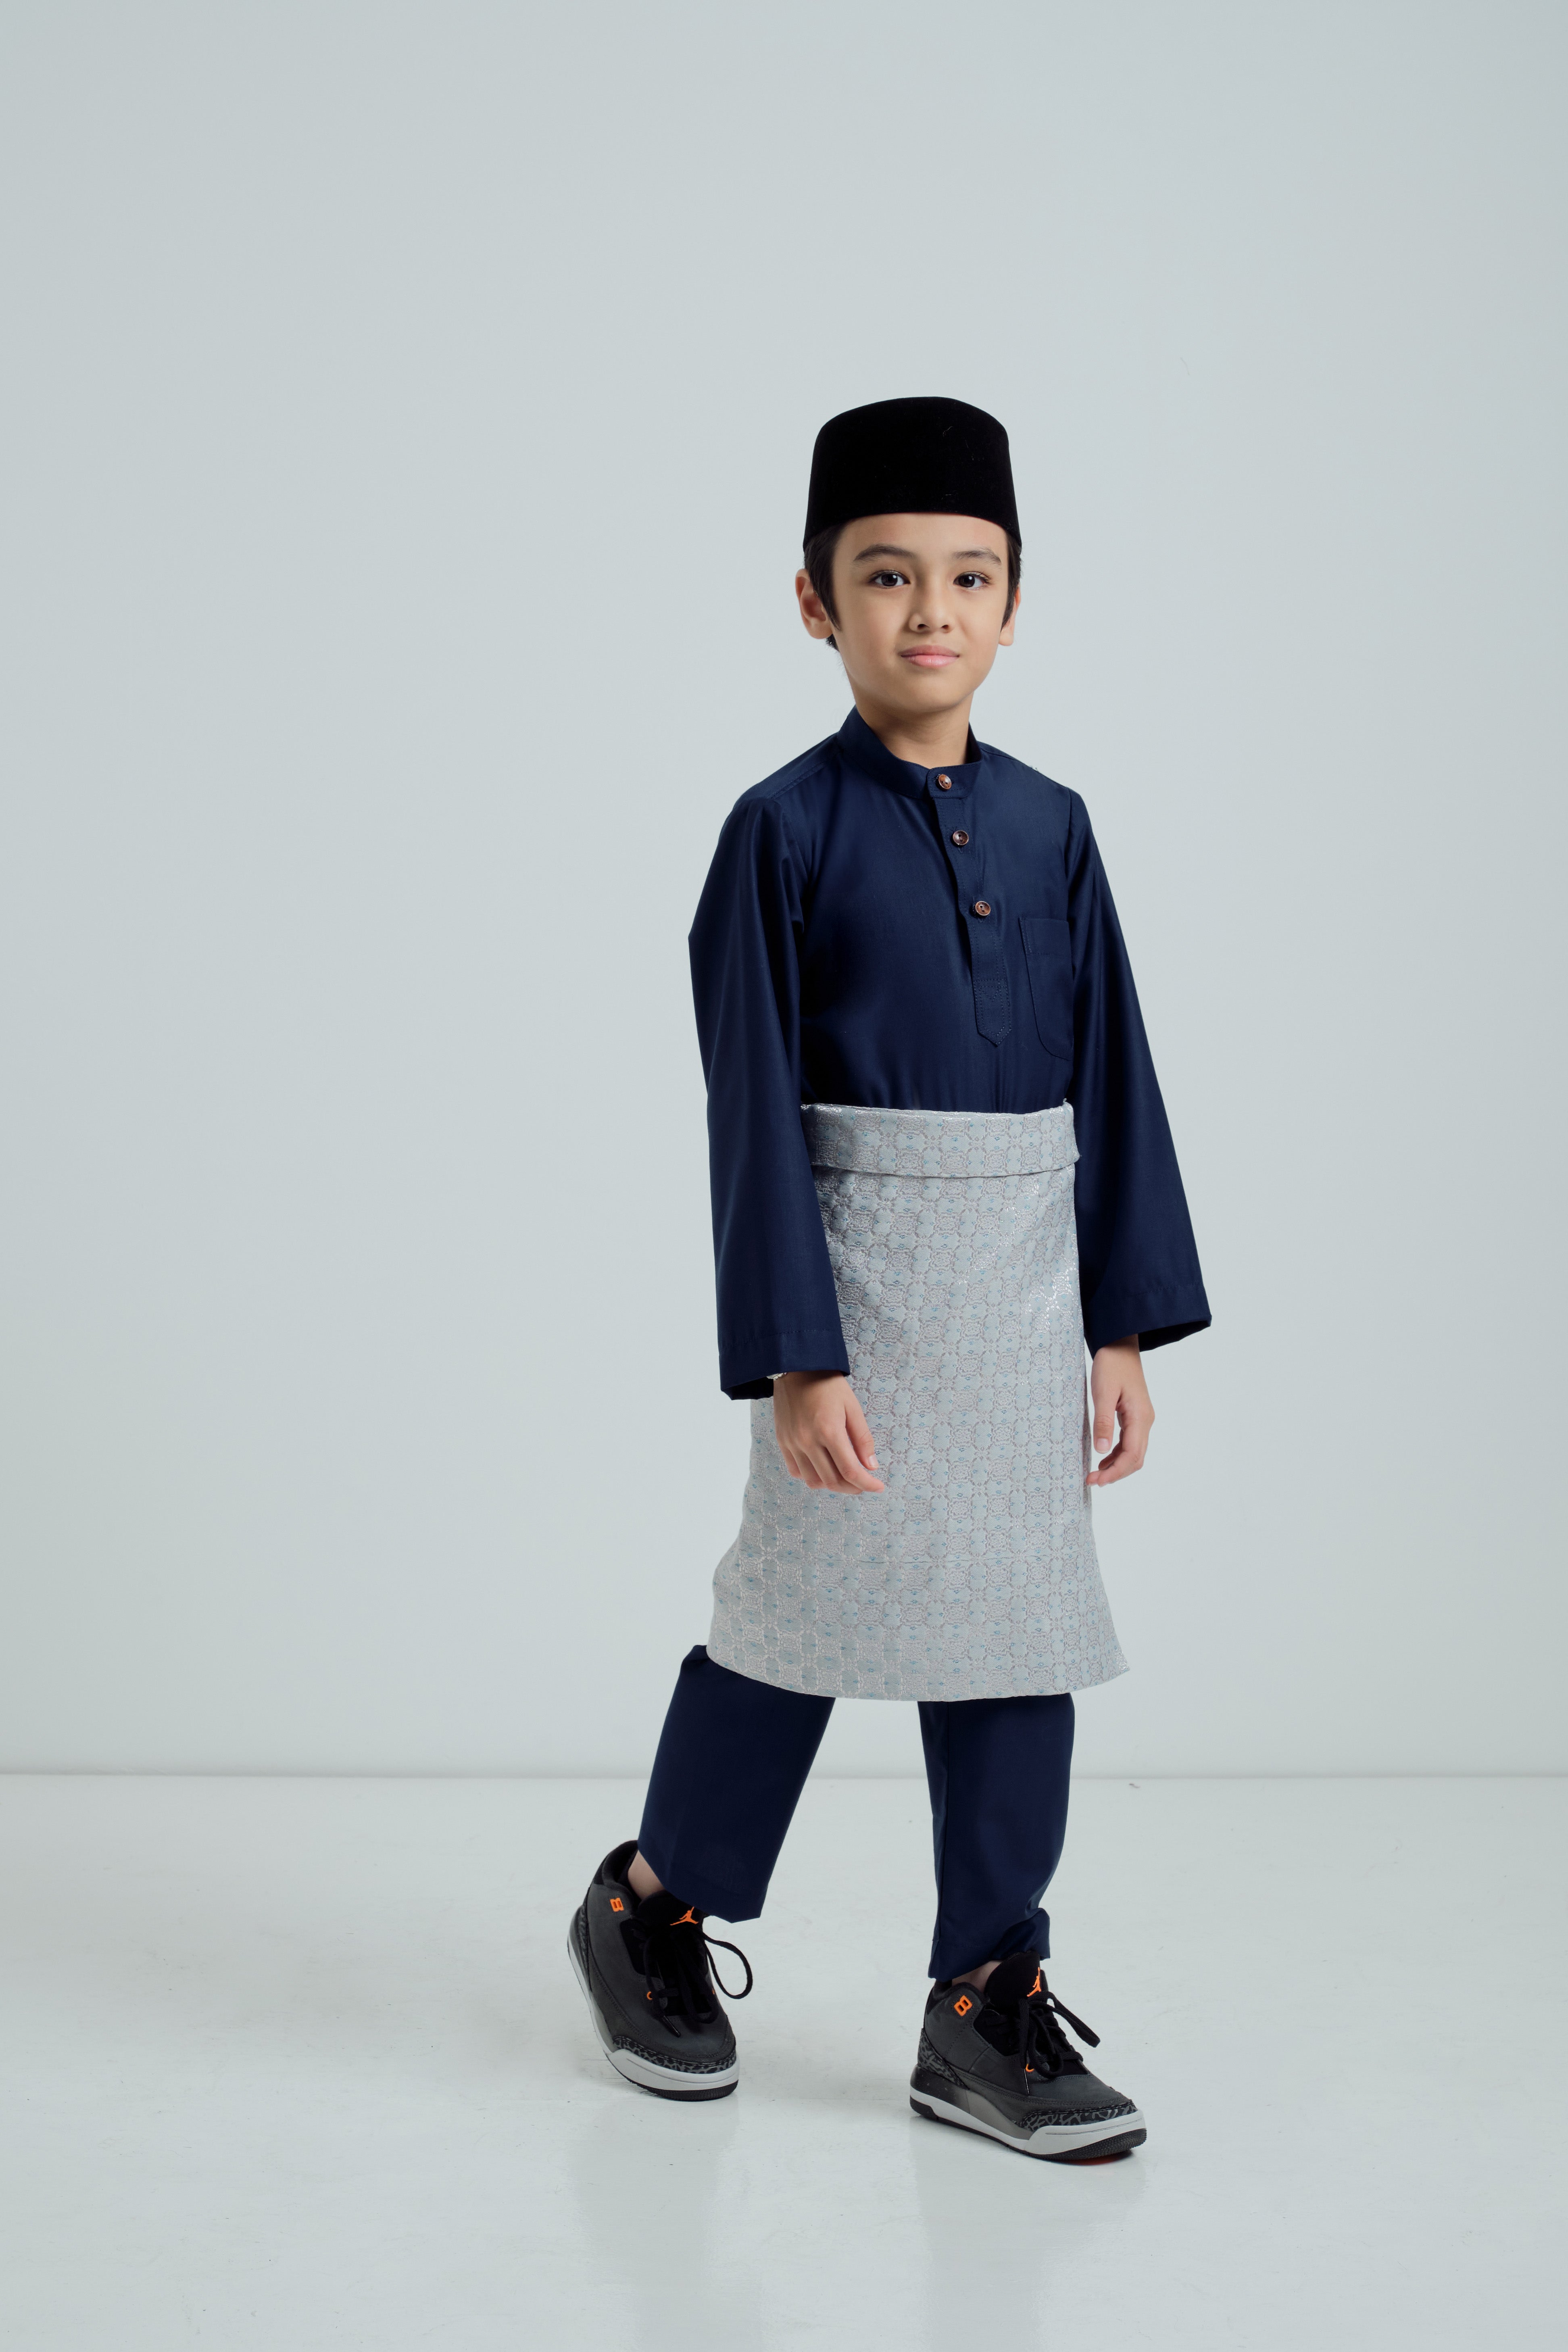 Patawali Boys Baju Melayu Cekak Musang - Navy Blue